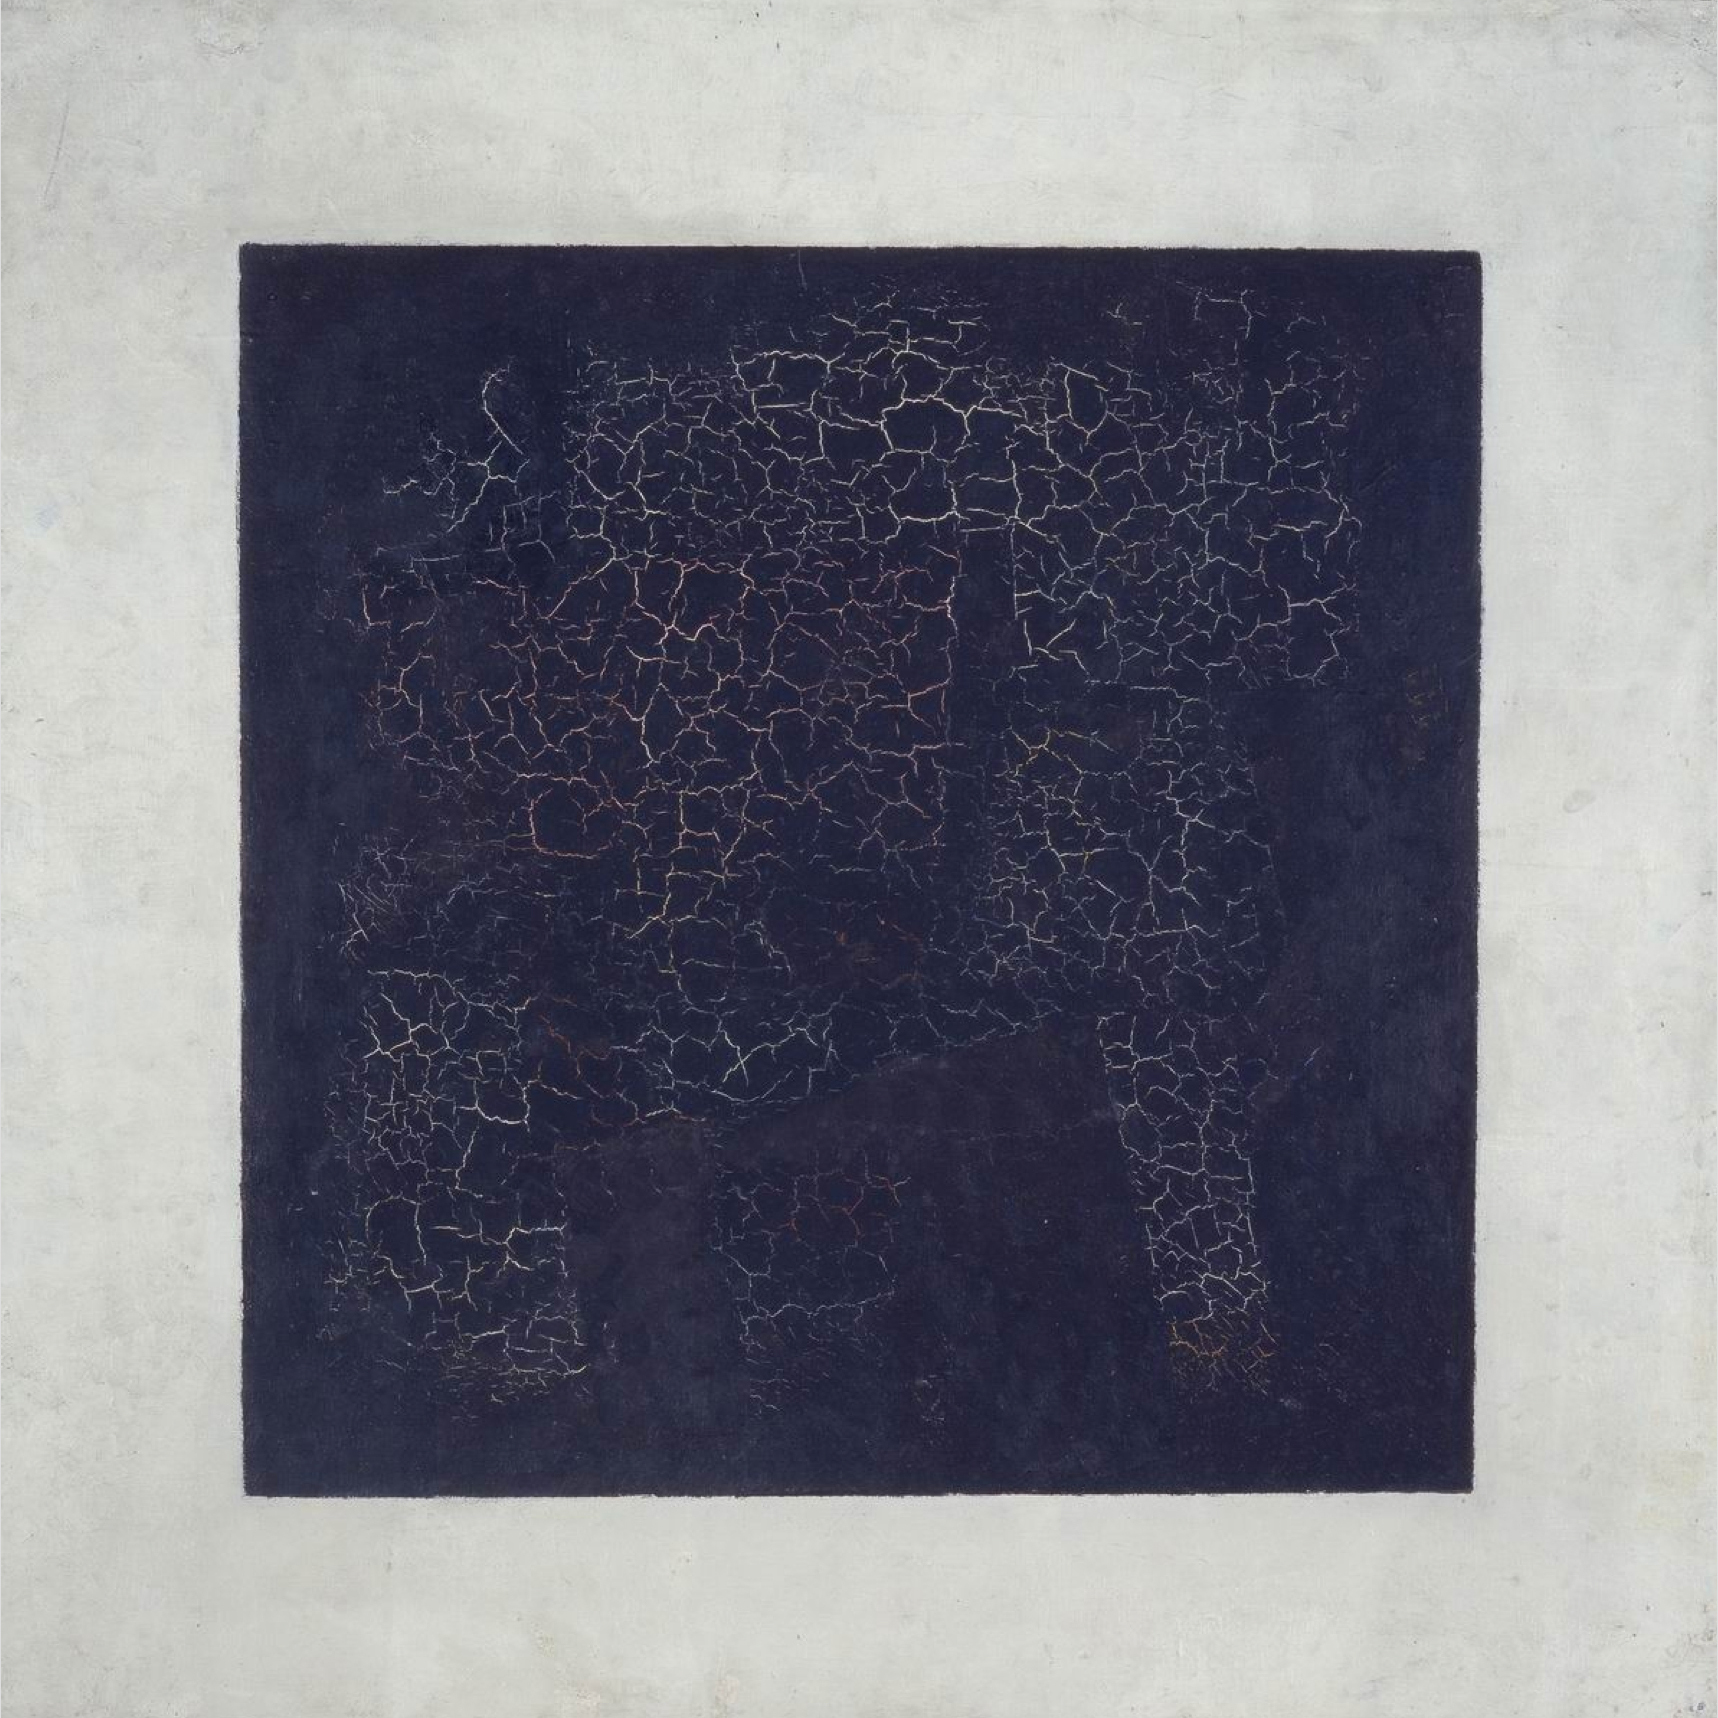 Kazimir_Malevich,_1915,_Black_Suprematic_Square,_oil_on_linen_canvas,_79.5_x_79.5_cm,_Tretyakov_Gallery,_Moscow.jpg (1718×1724)